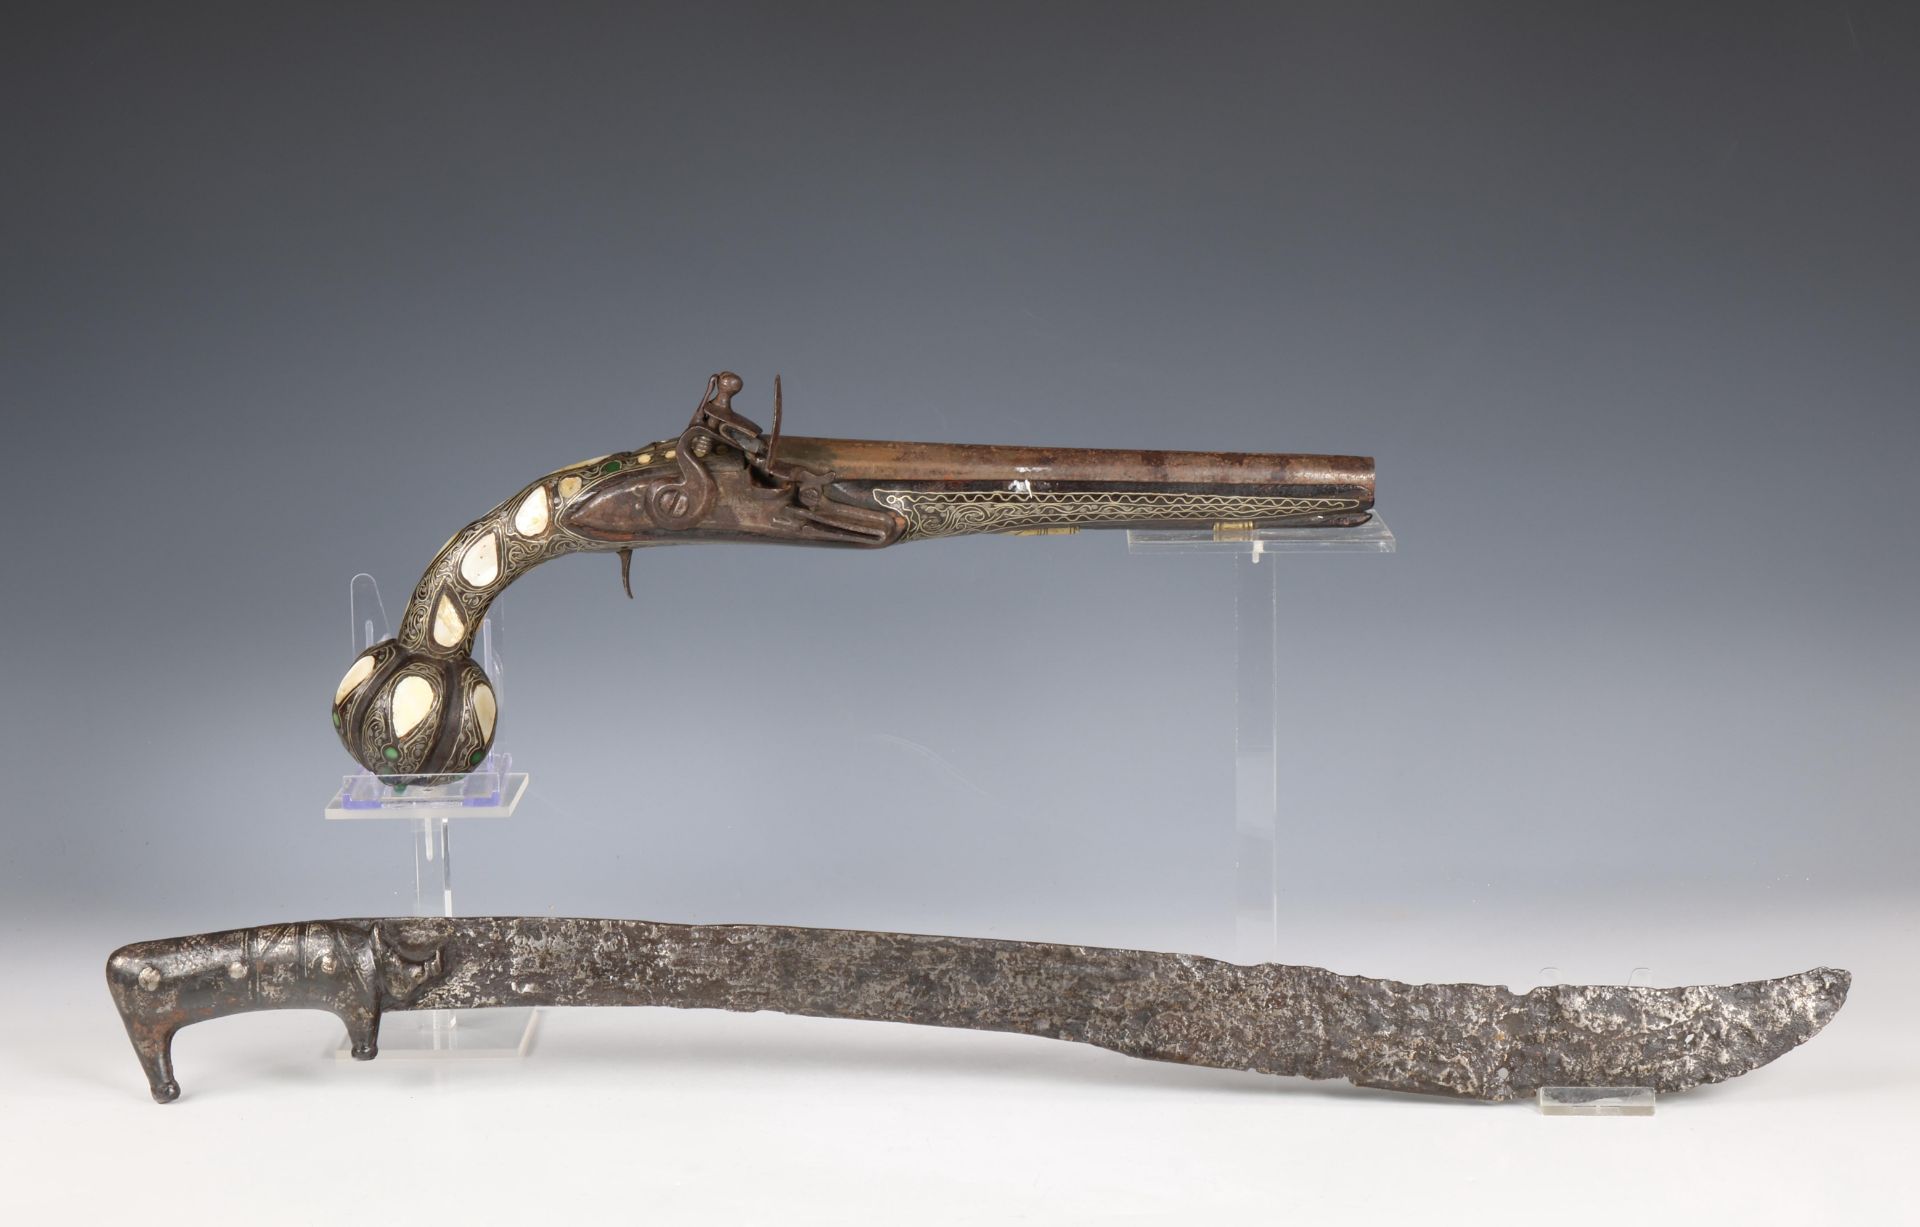 A Eastern style flintlock pistol and a iron sword